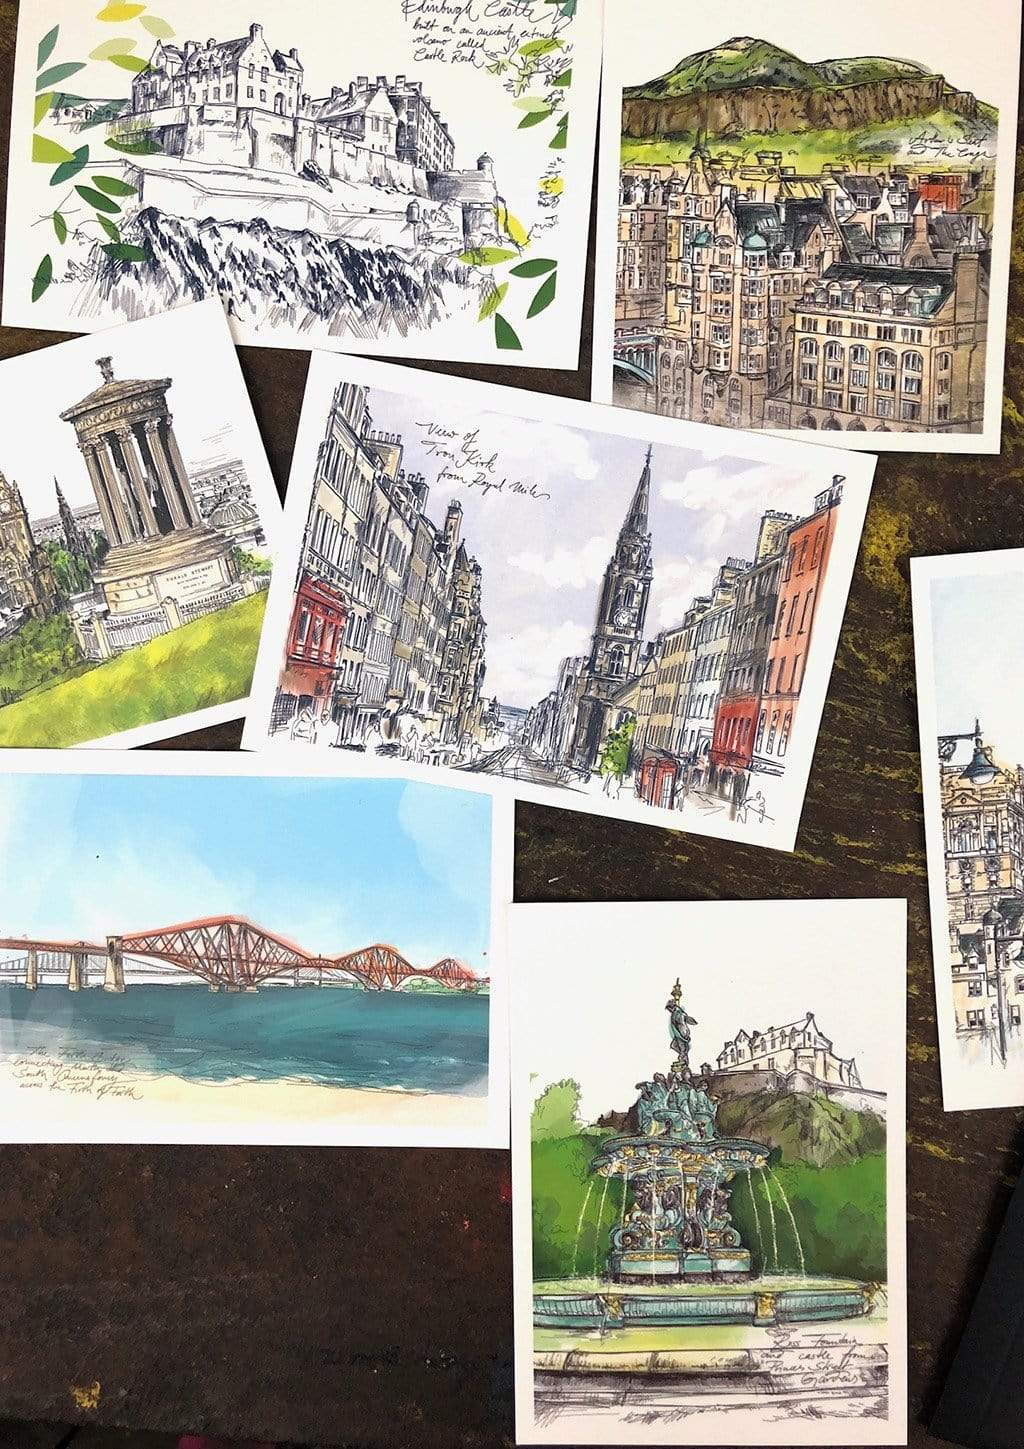 Enchanting Edinburgh Mini Art Print Set